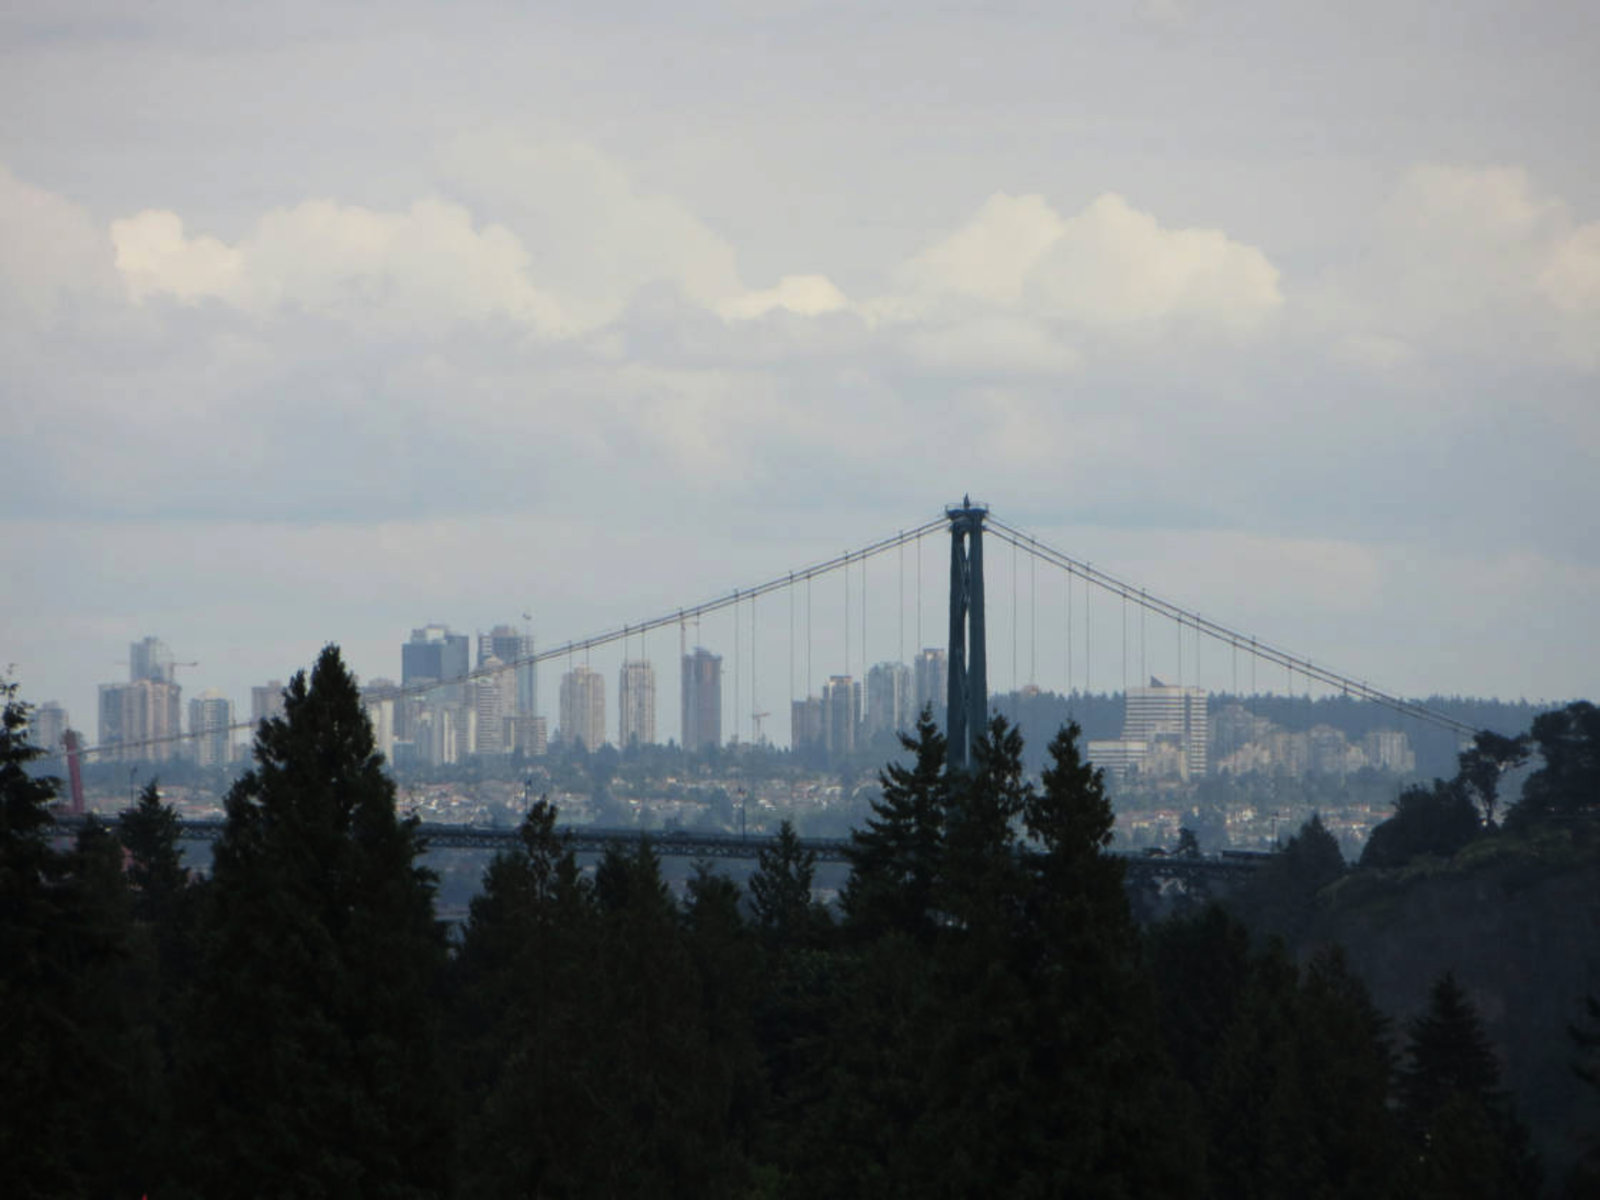 Bridge view